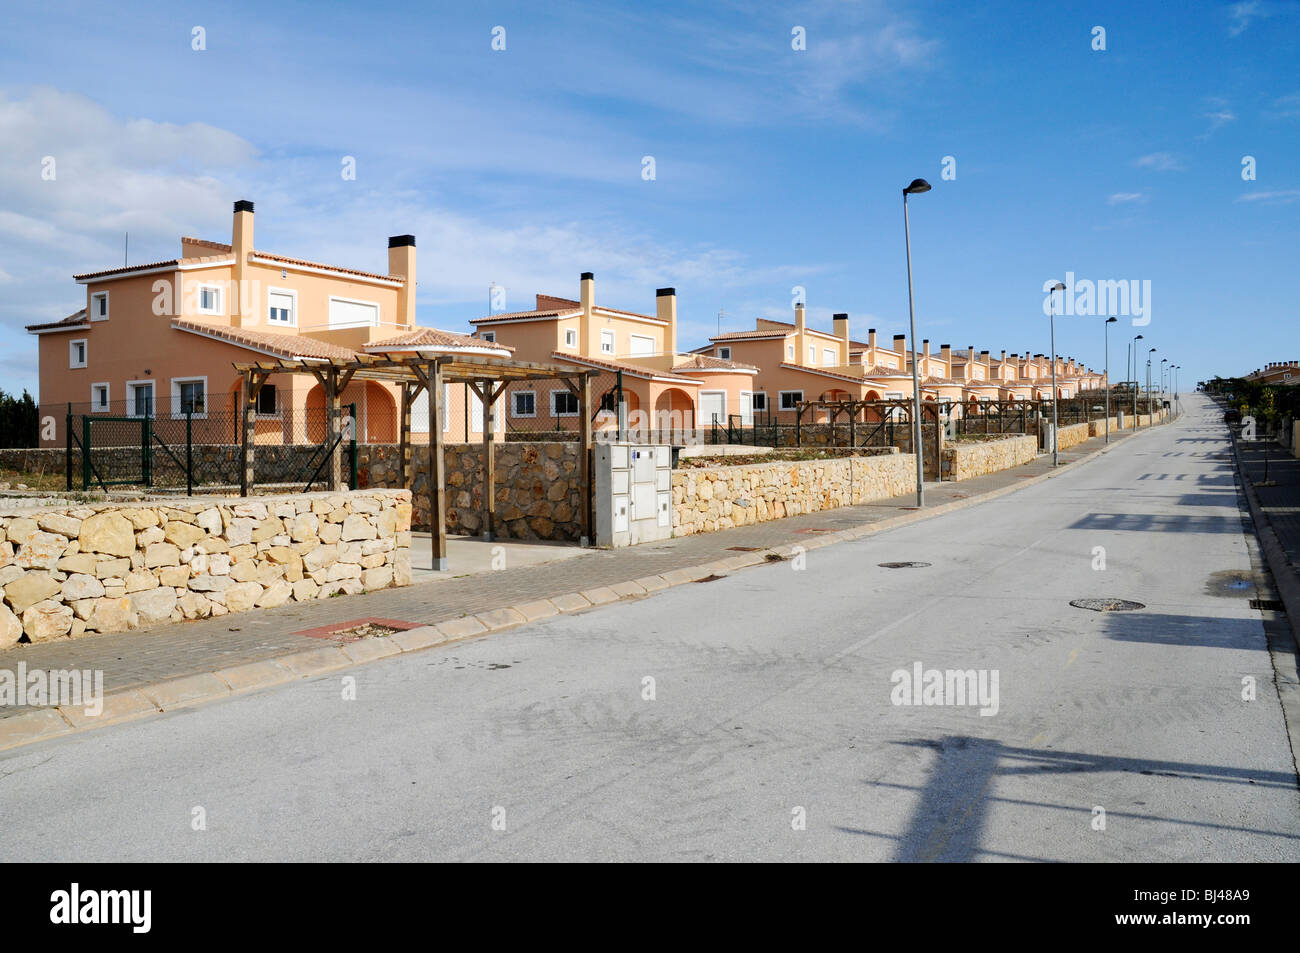 Row of houses, road, residential neighbourhood, Gata de Gorgos, Javea, Costa Blanca, Alicante province, Spain, Europe Stock Photo